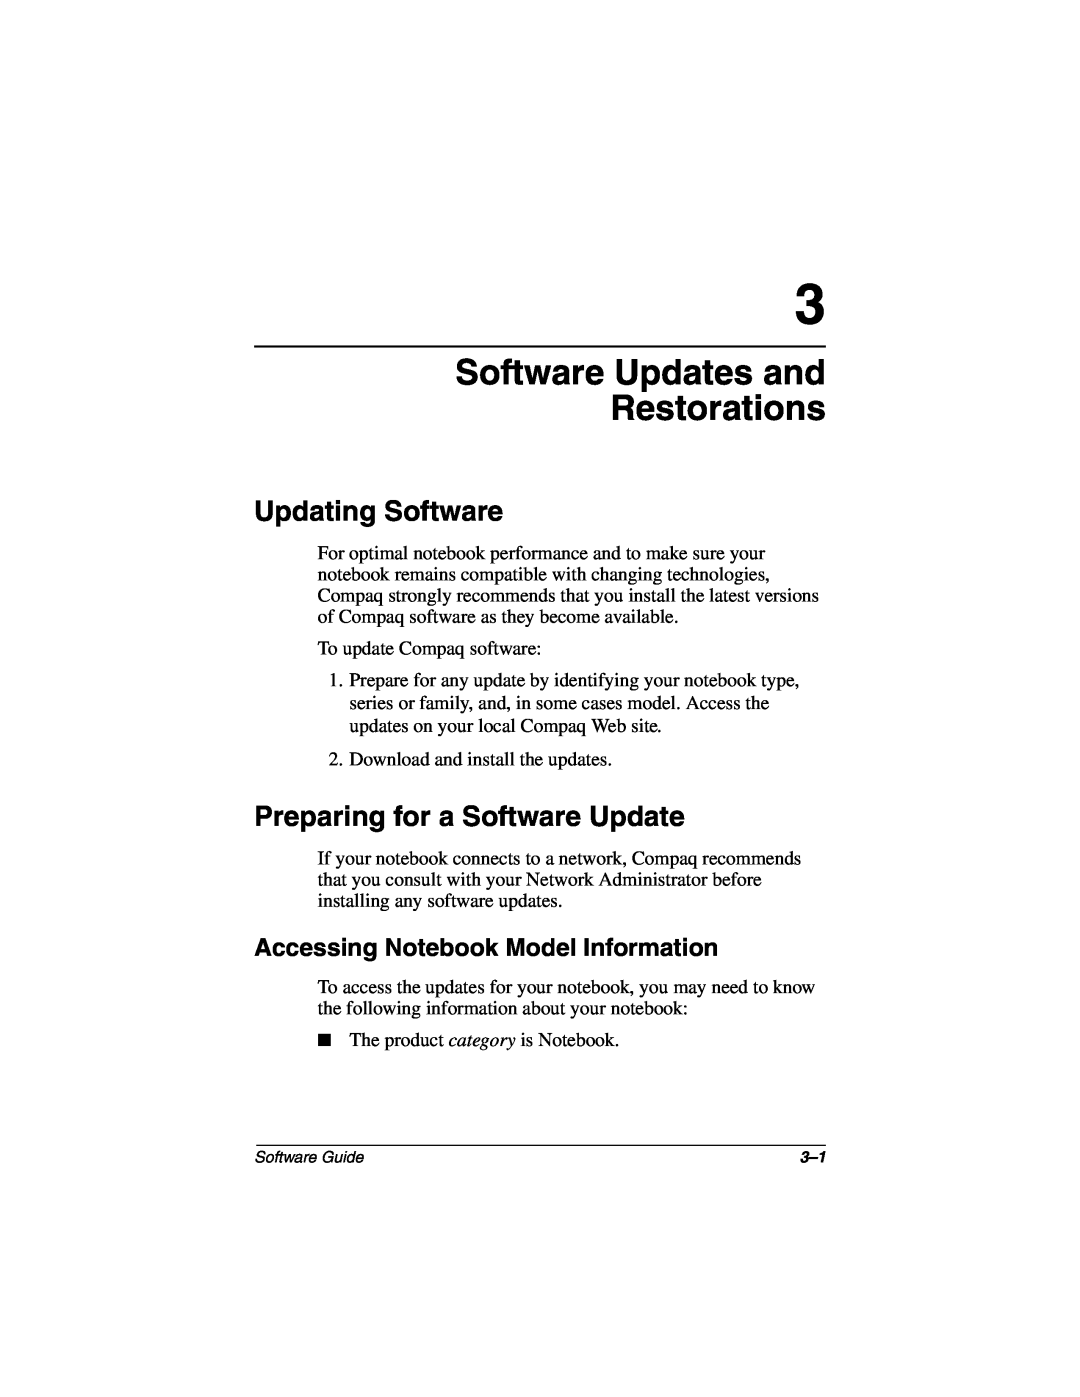 HP 910AP, 955AP, 950AP, 943AP, 940AP Software Updates and Restorations, Updating Software, Preparing for a Software Update 